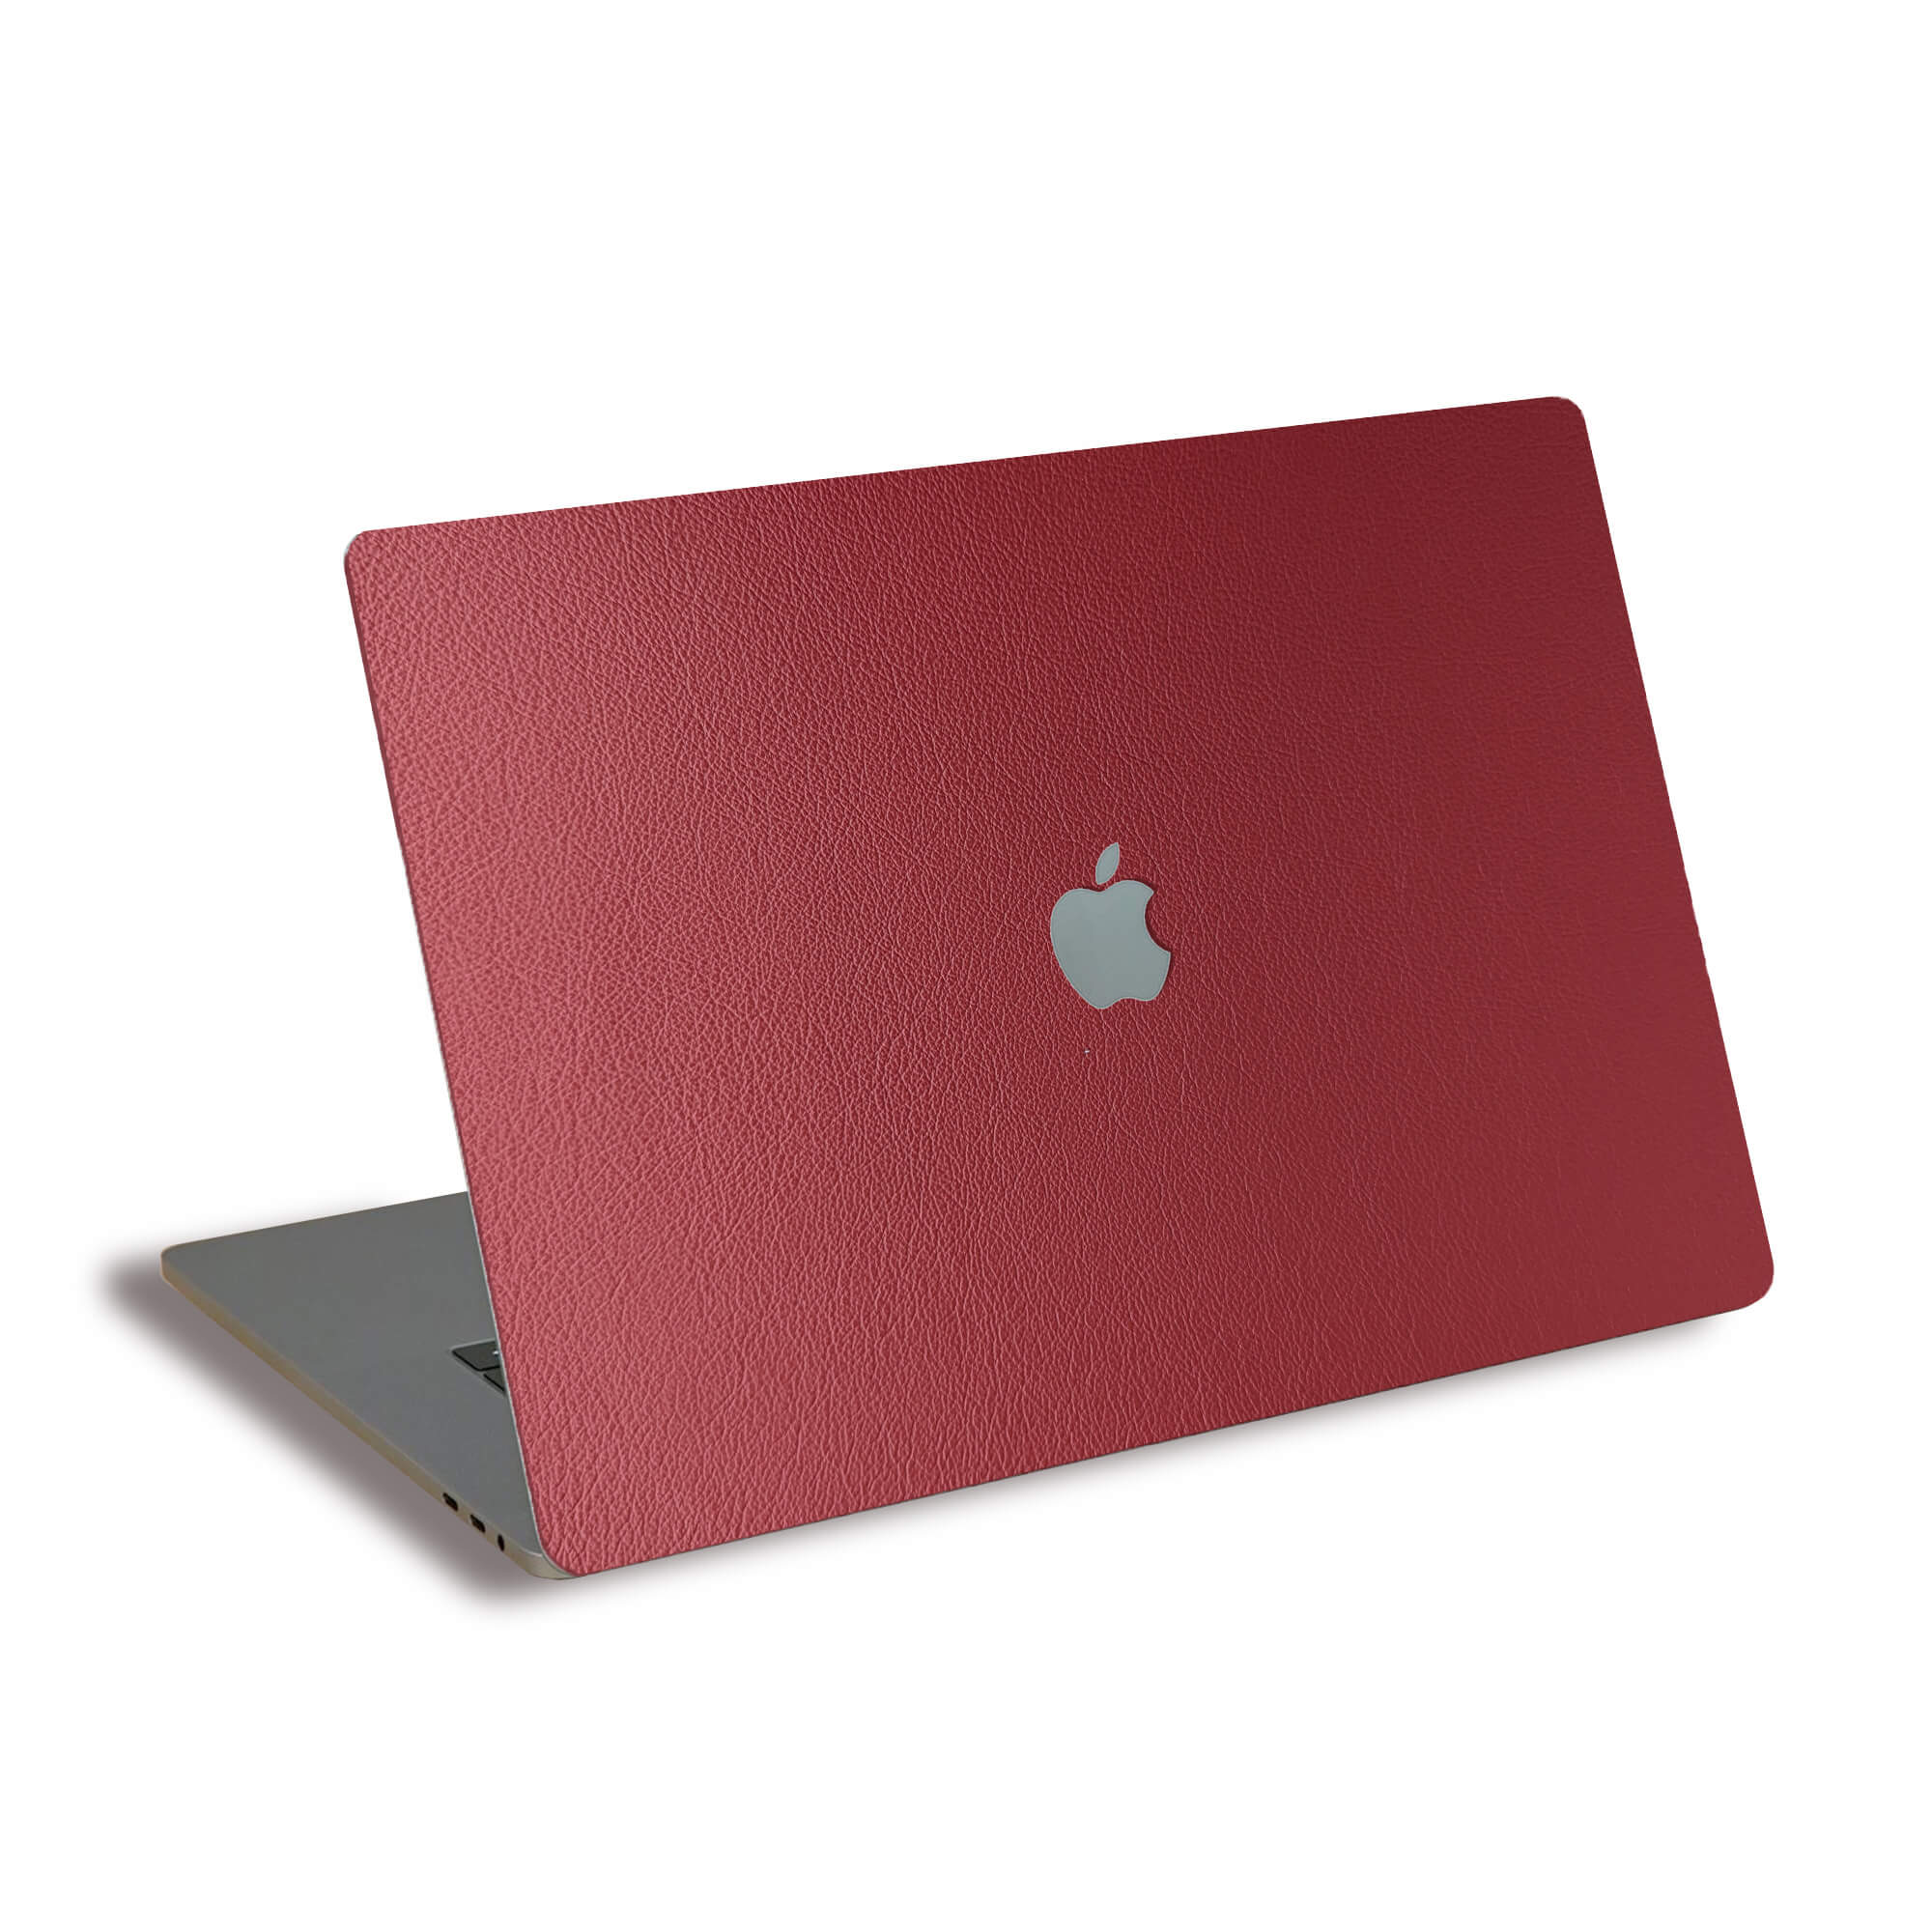 alt:Leather MacBook Skin| var:red |, LRE-MB-Pro16, LRE-MB-Pro15, LRE-MB-Pro1320, LRE-MB-Air20, LRE-MB-Ret15, LRE-MB-Ret13, LRE-MB-Air13, LRE-MB-12